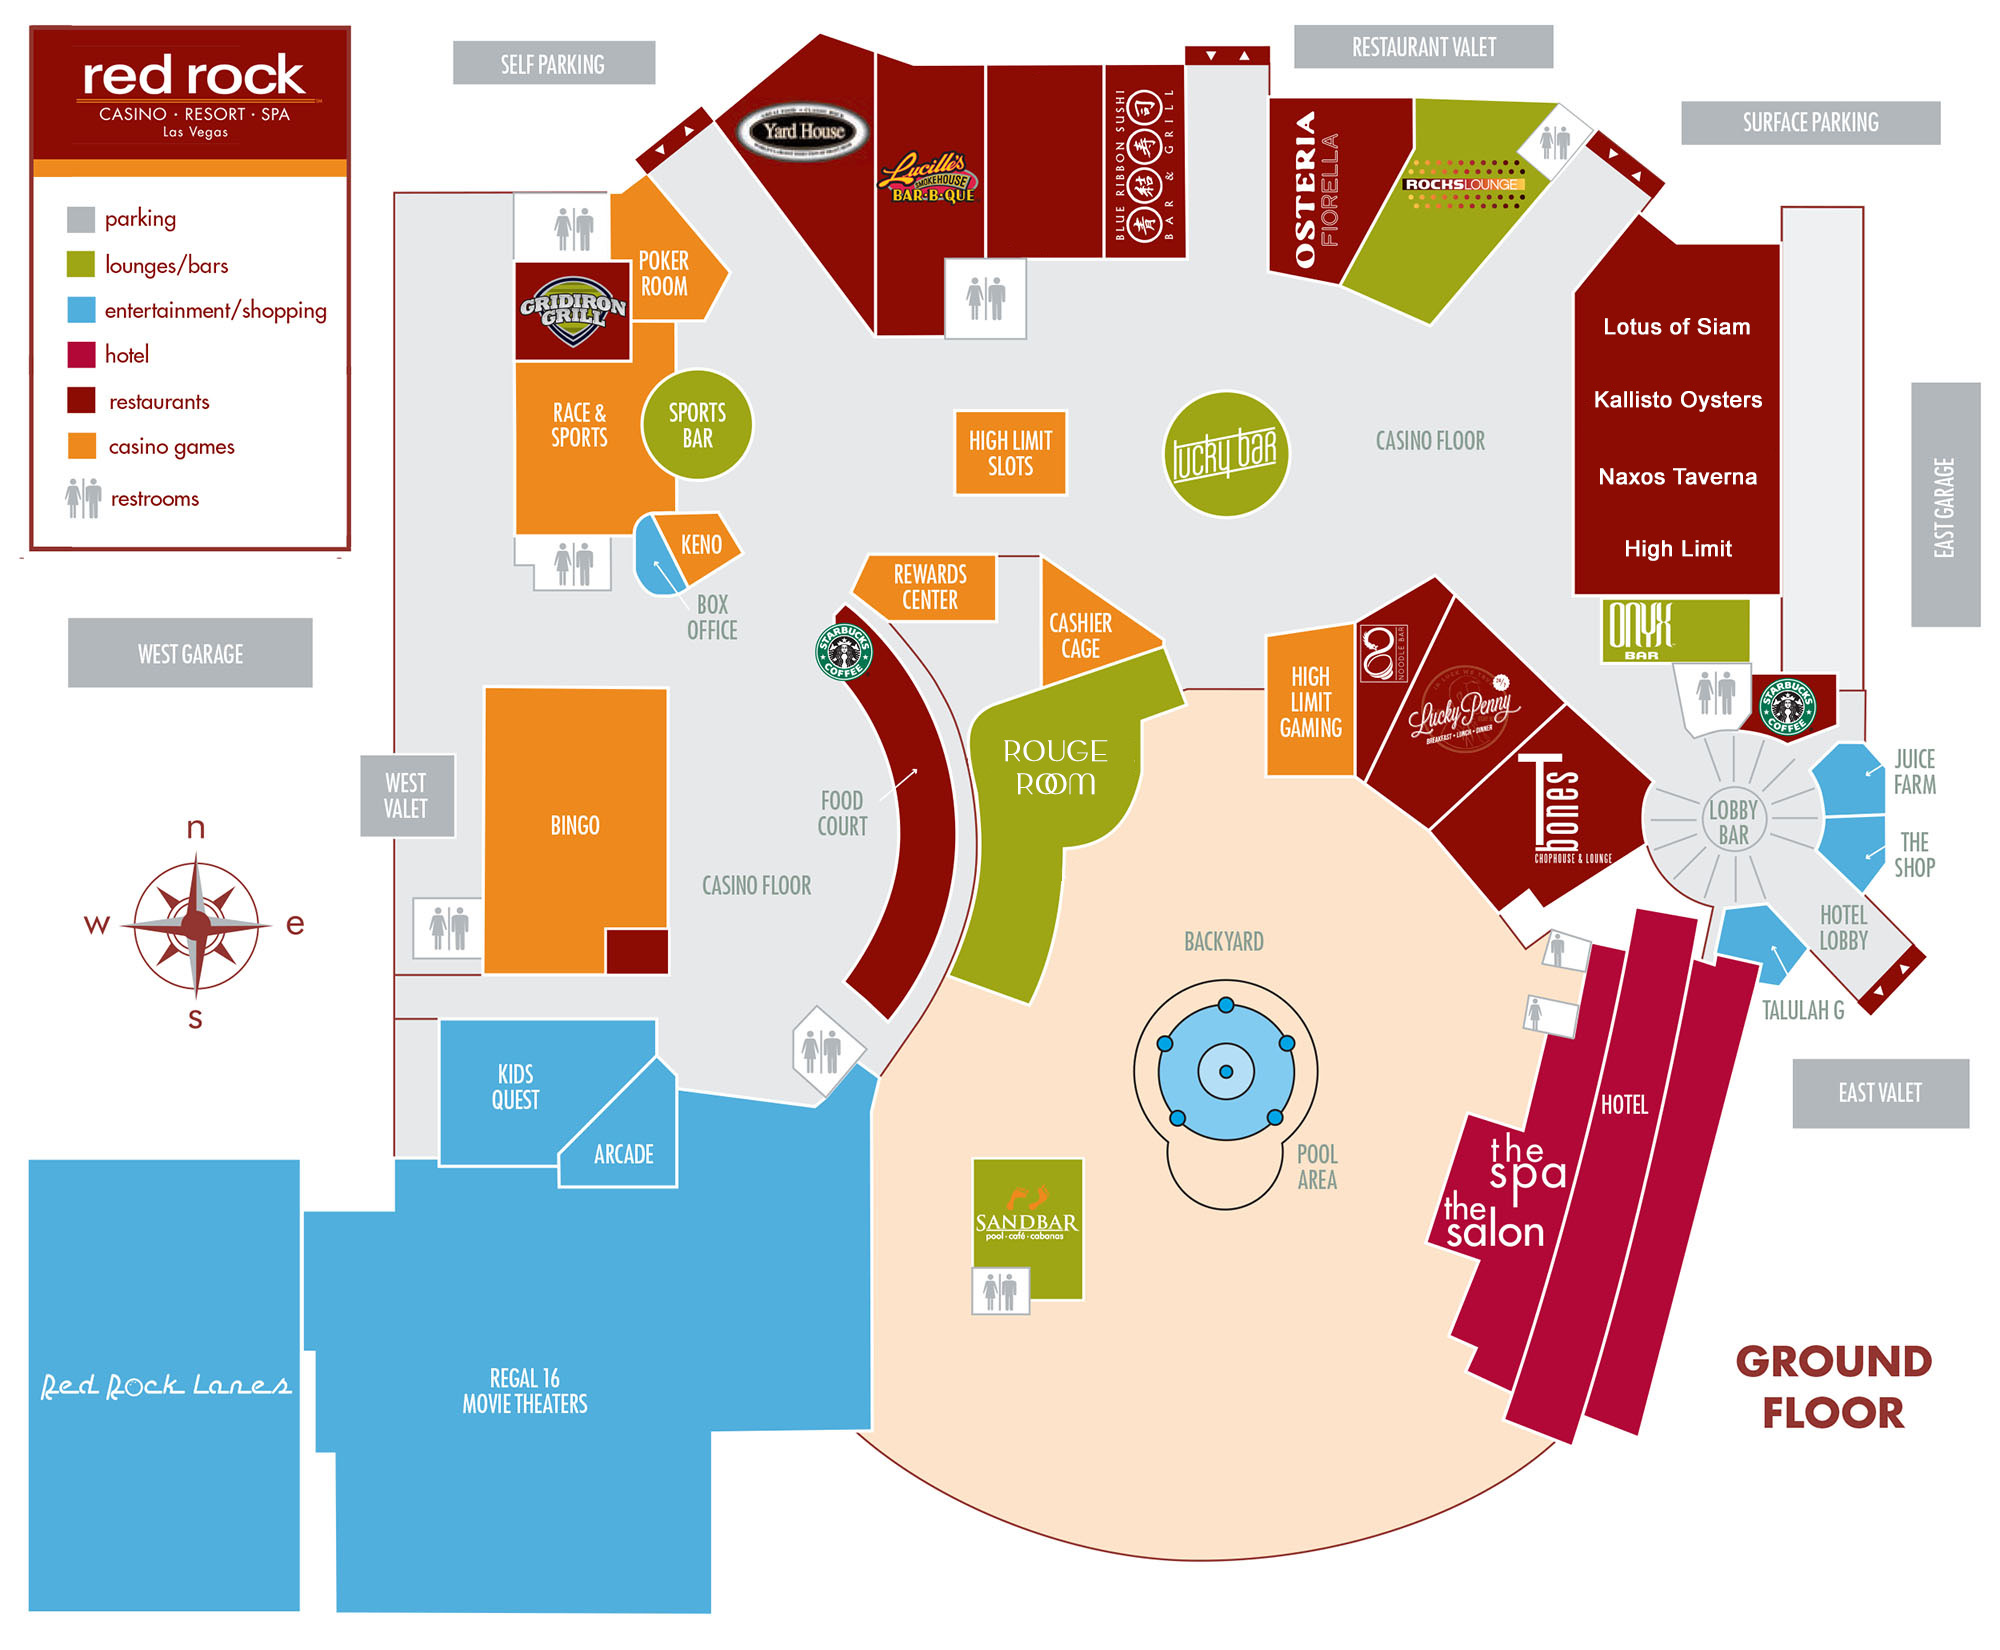 Red Rock Casino Property Map & Floor Plans Las Vegas